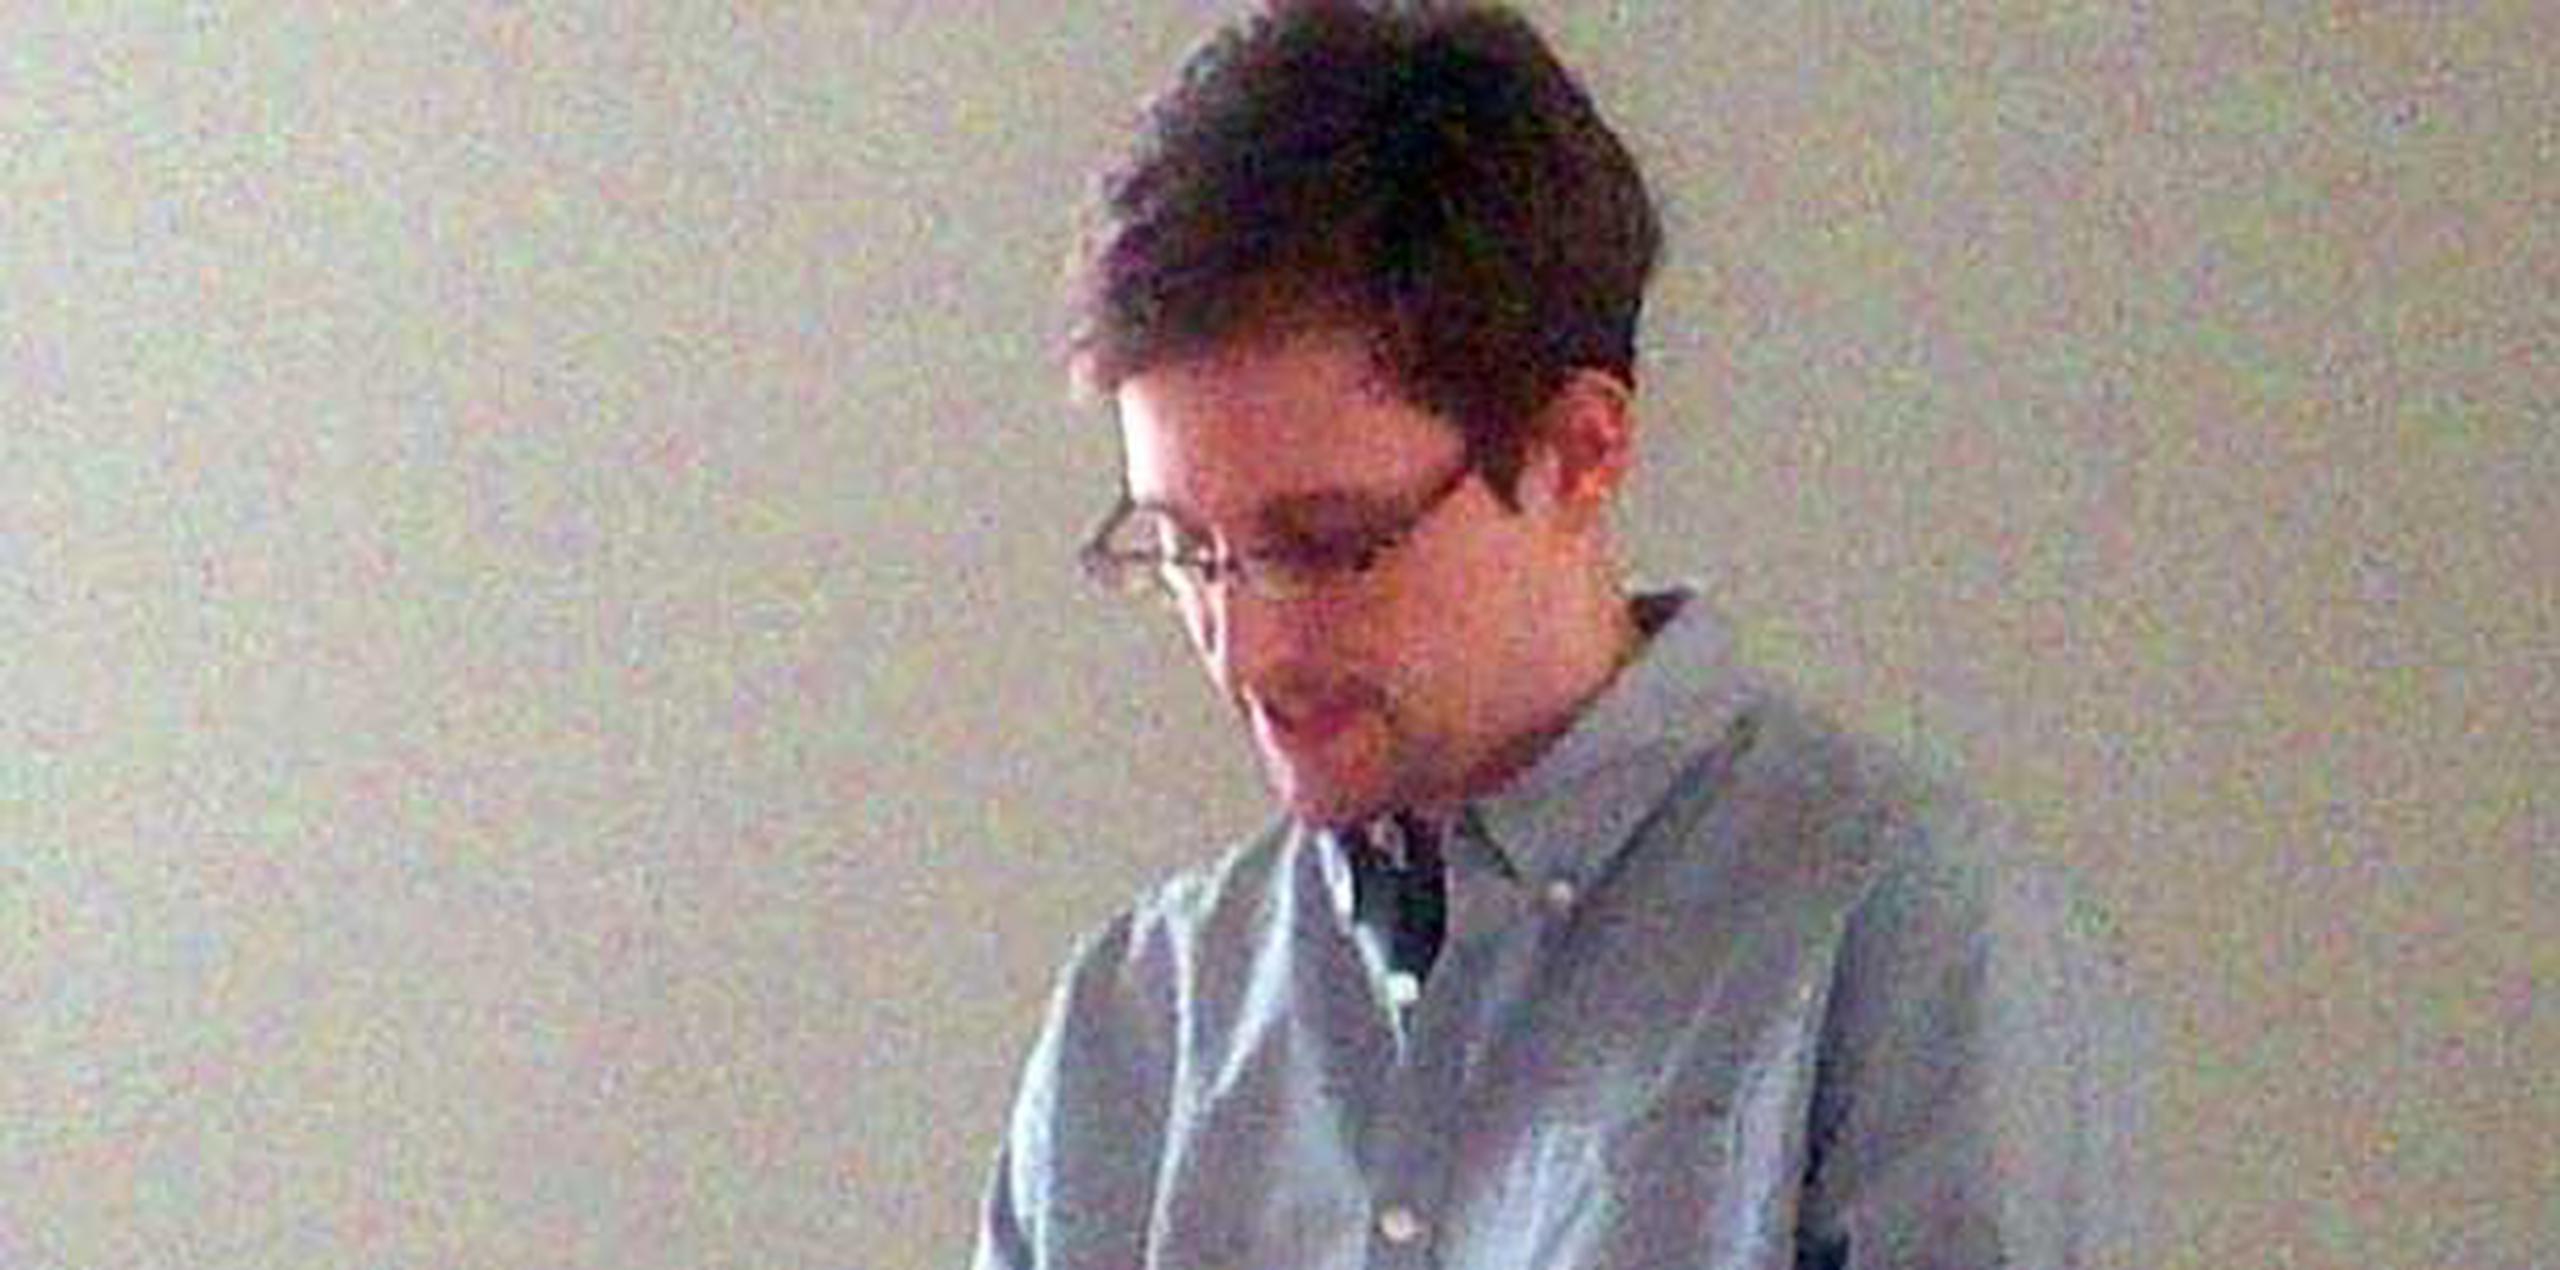 Edward Snowden dijo la semana pasada que solicitaría asilo en Rusia. (Tanya Lokshina/Human Rights Watch/Archivo)
